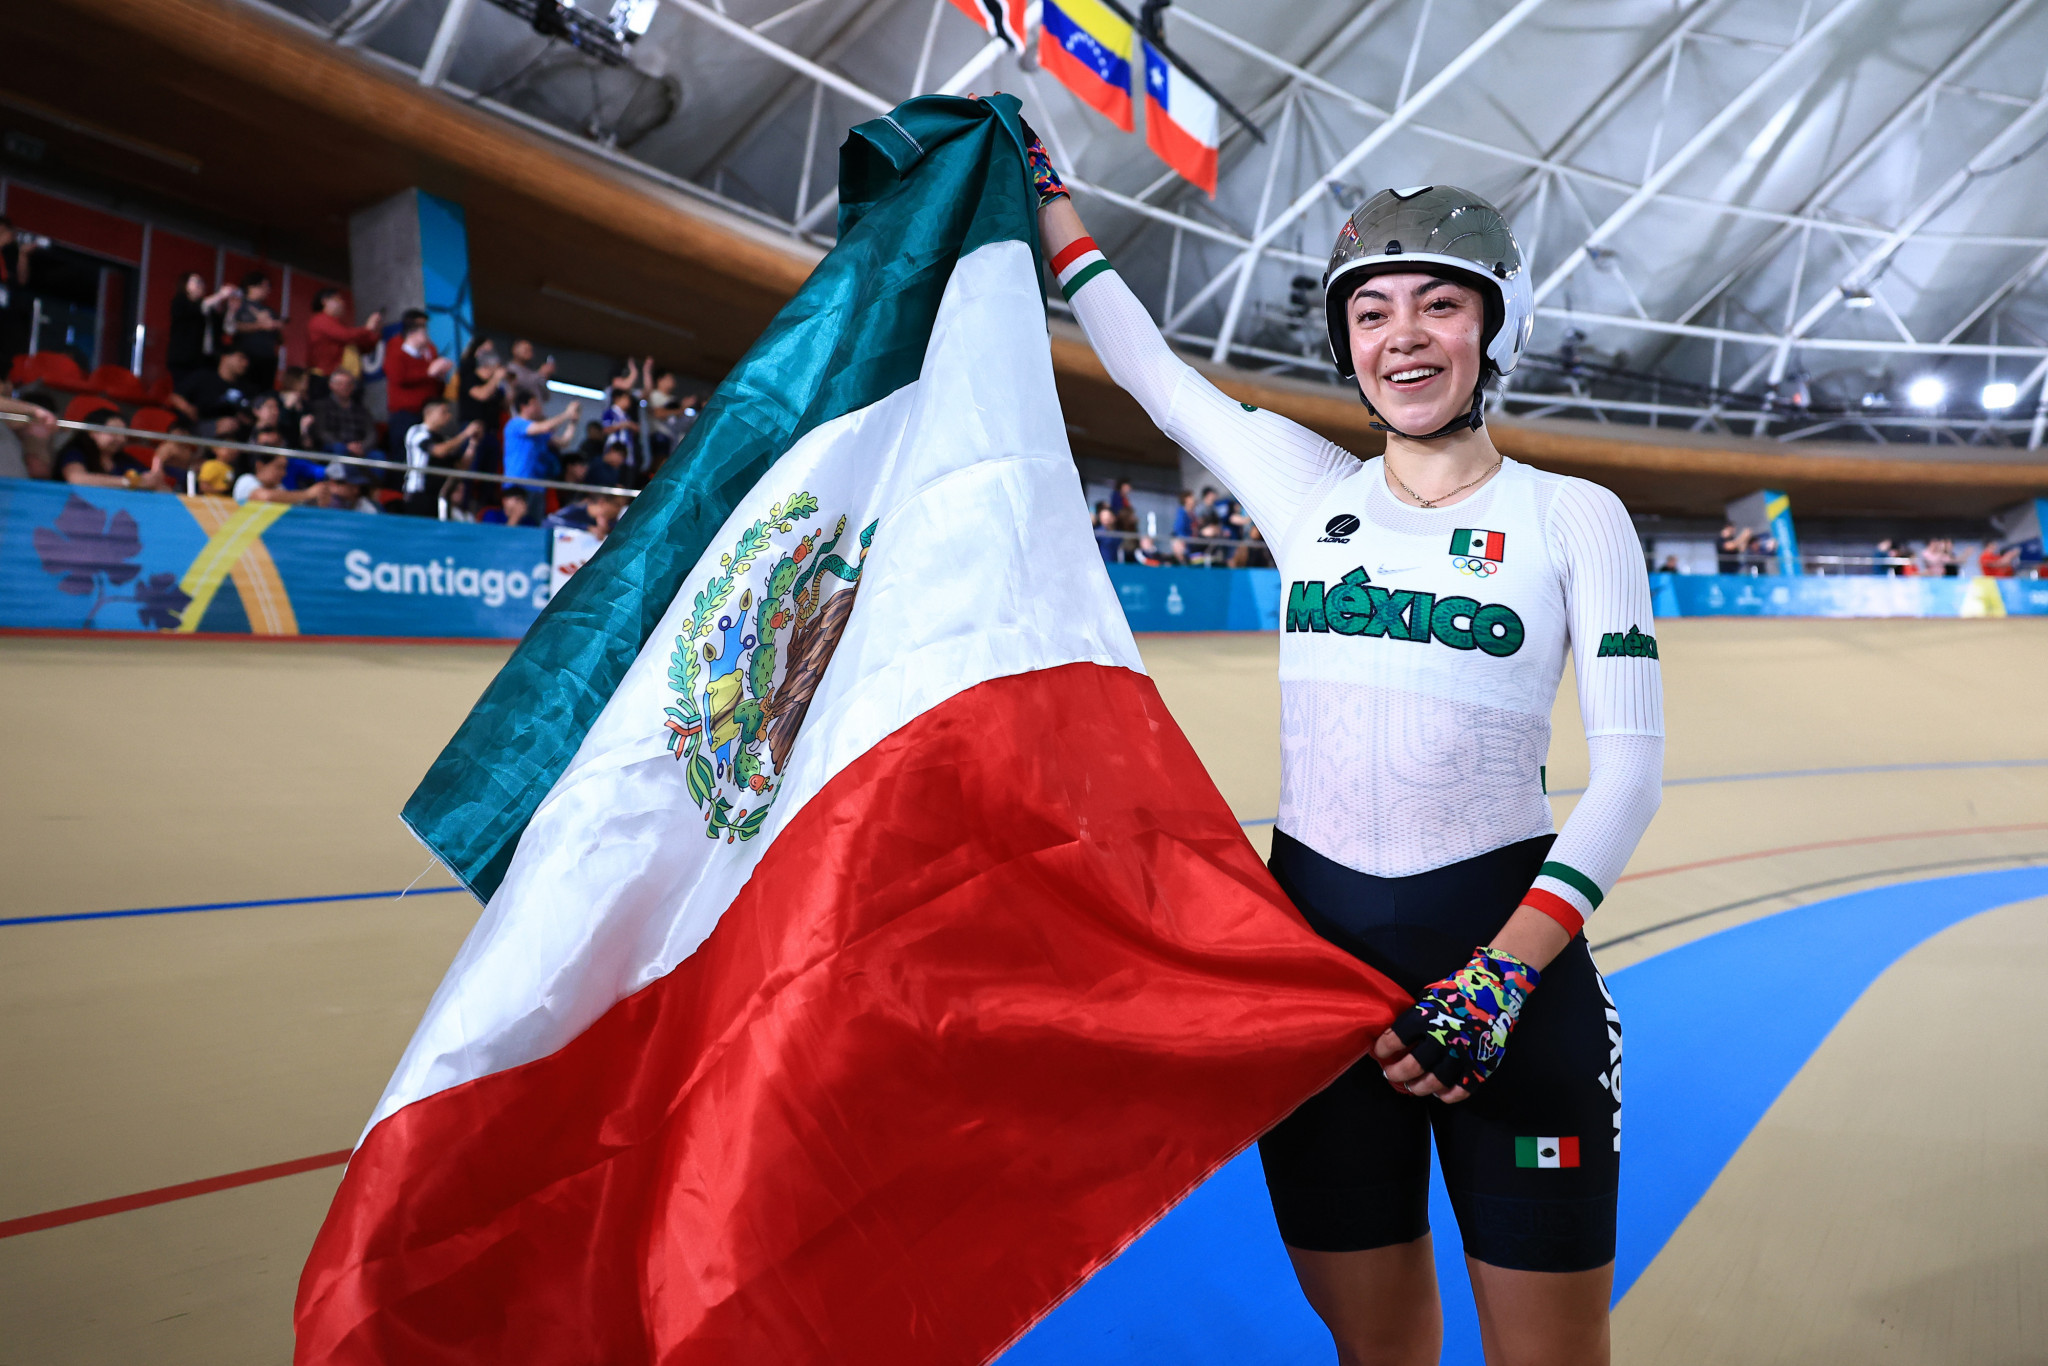 Mexico's Yareli Acevedo Mendoza won the women's omnium at the velodrome ©Getty Images